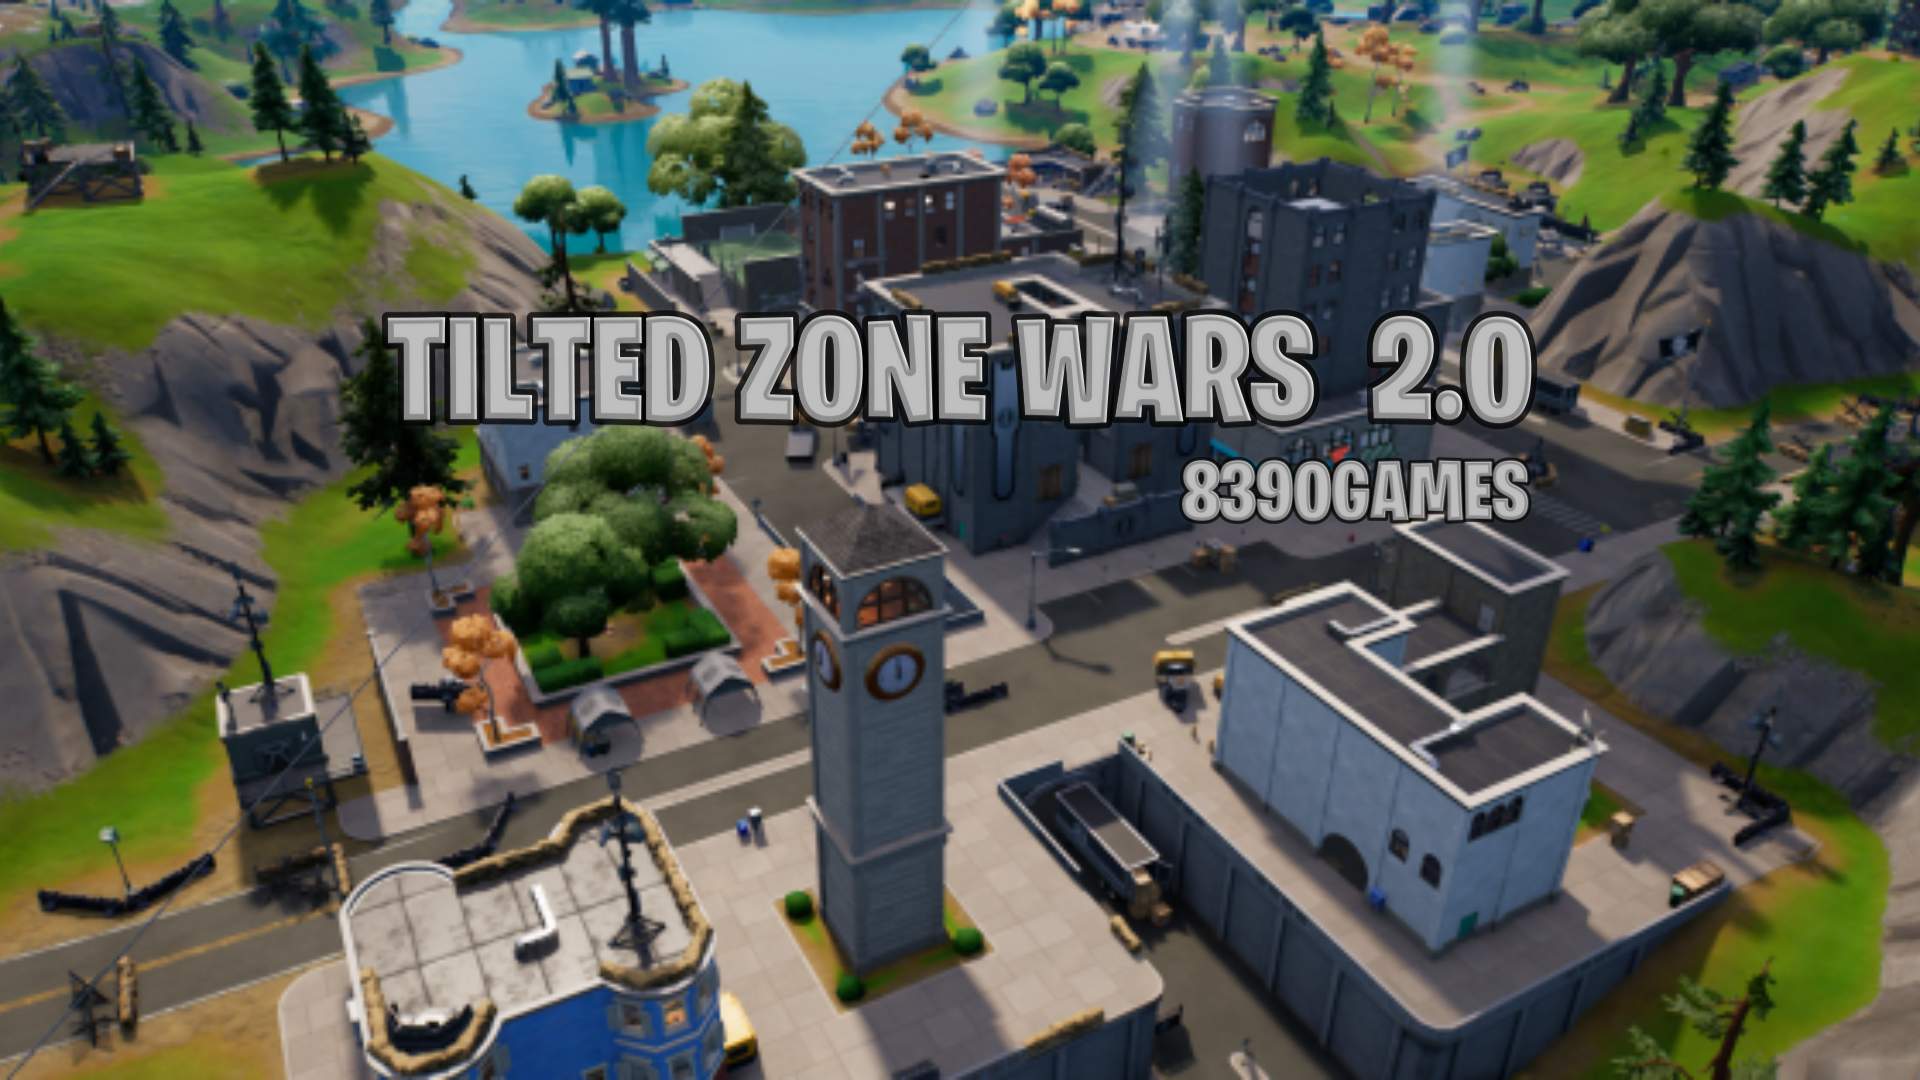 Tilted ZONE WARS 2.0